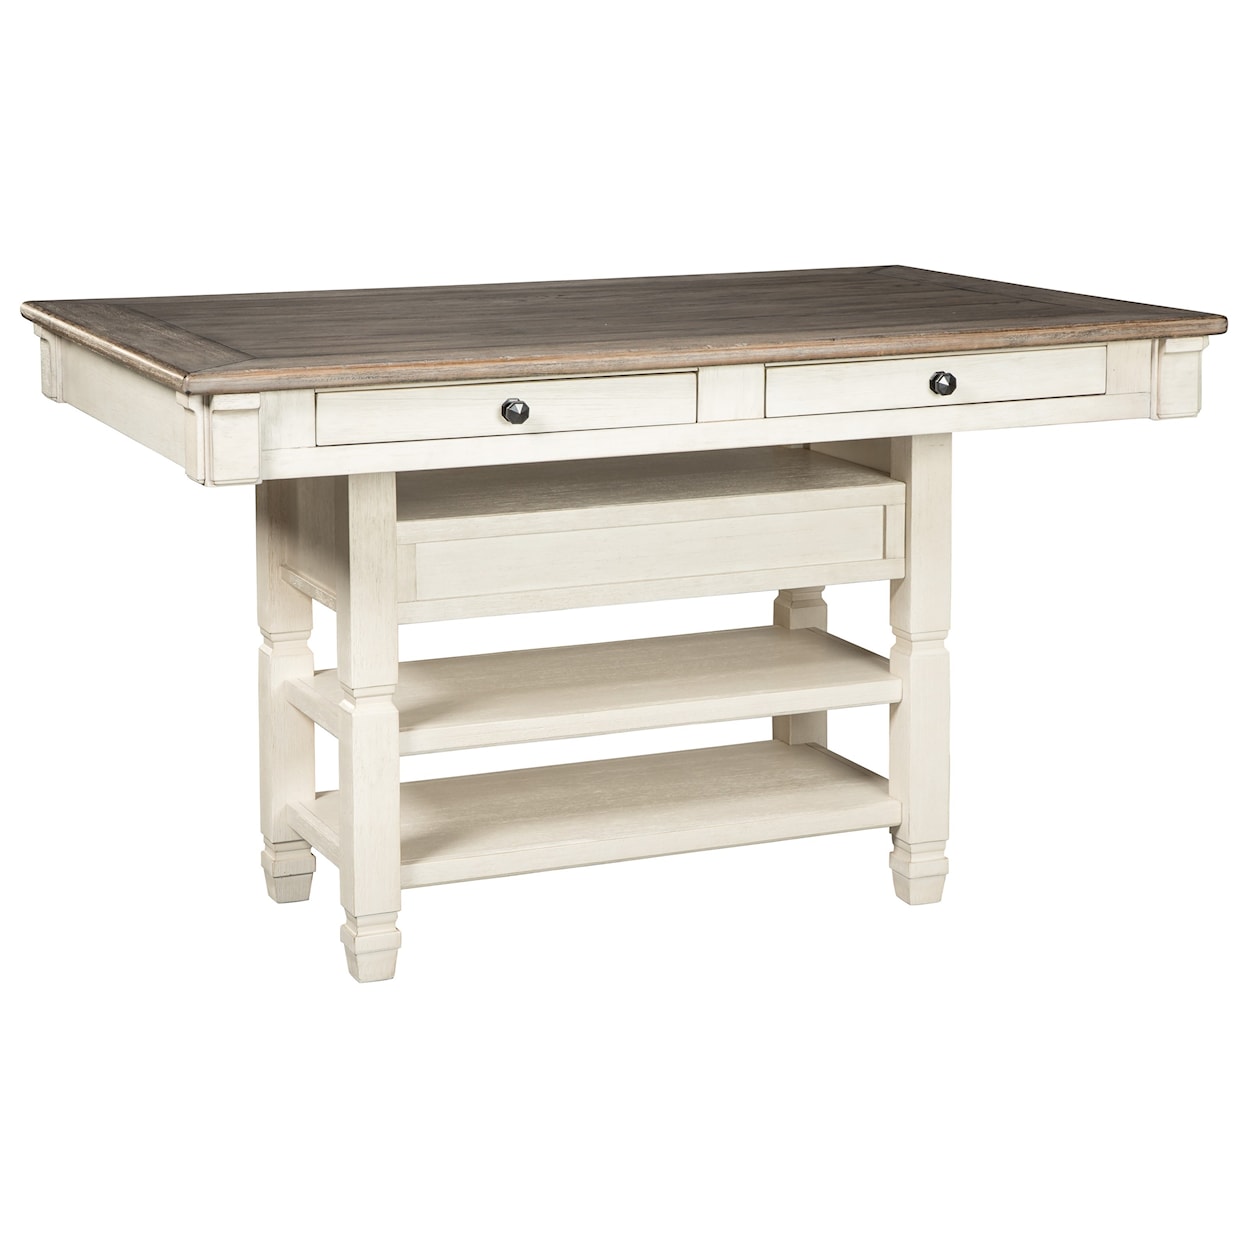 Signature Design Bolanburg 5-Piece Counter Table and Stool Set